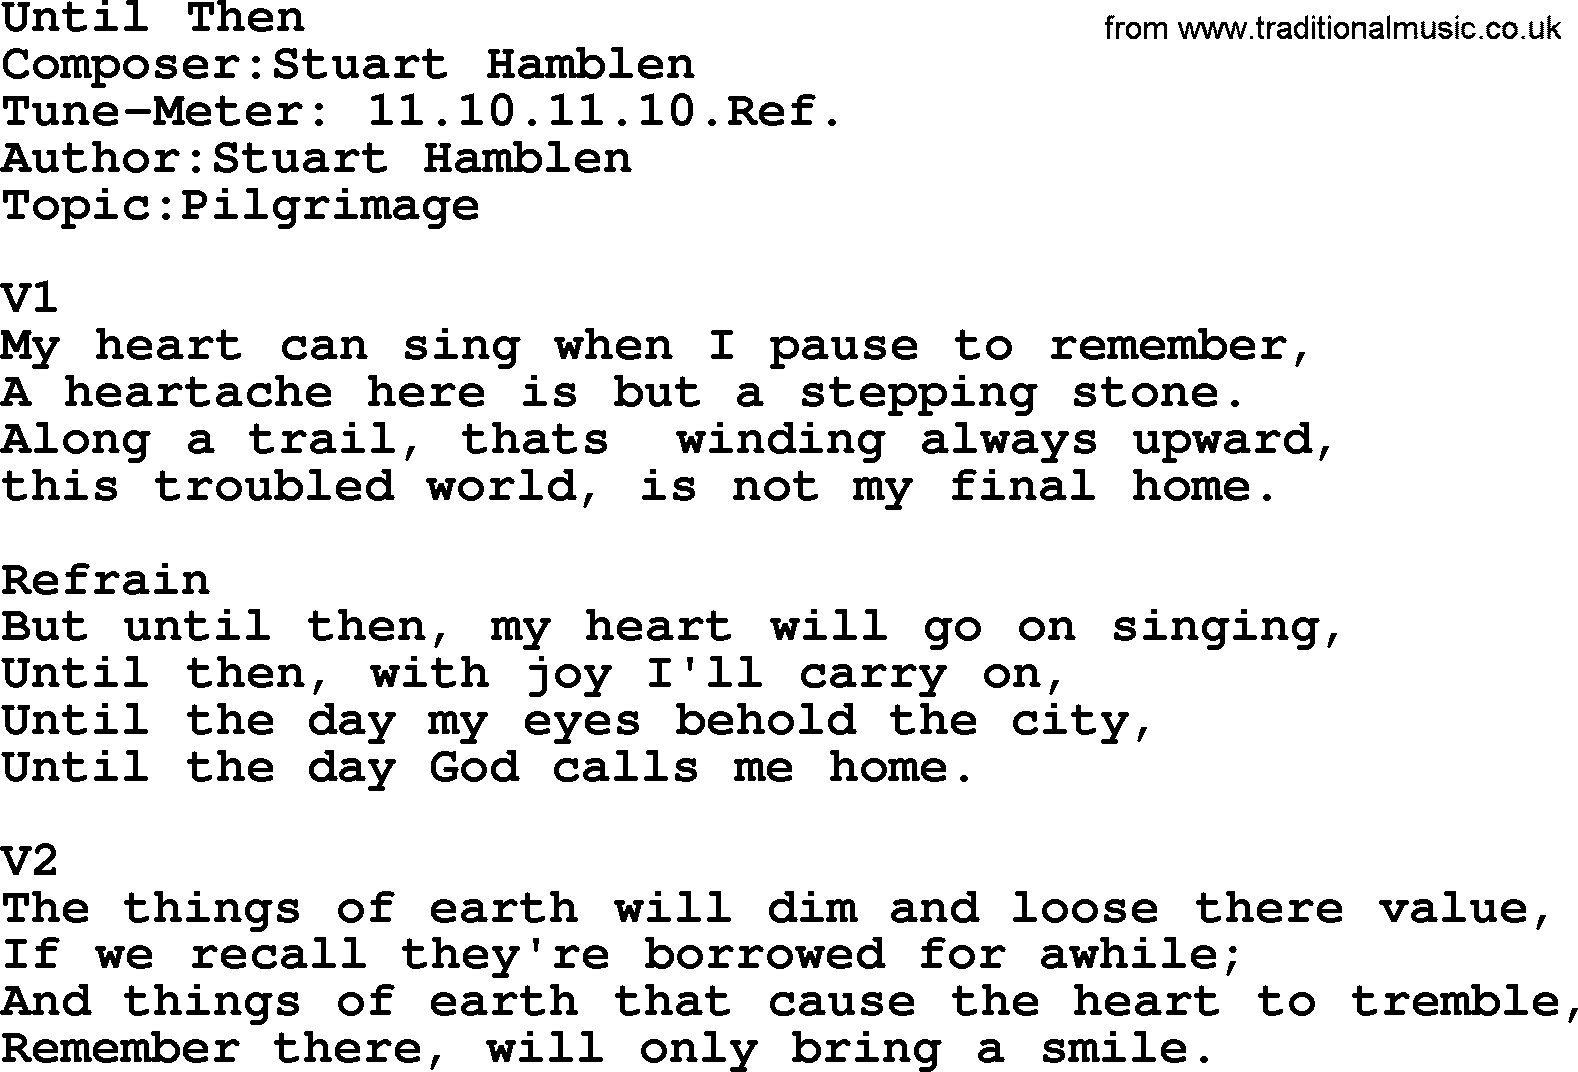 Adventist Hynms collection, Hymn: Until Then, lyrics with PDF